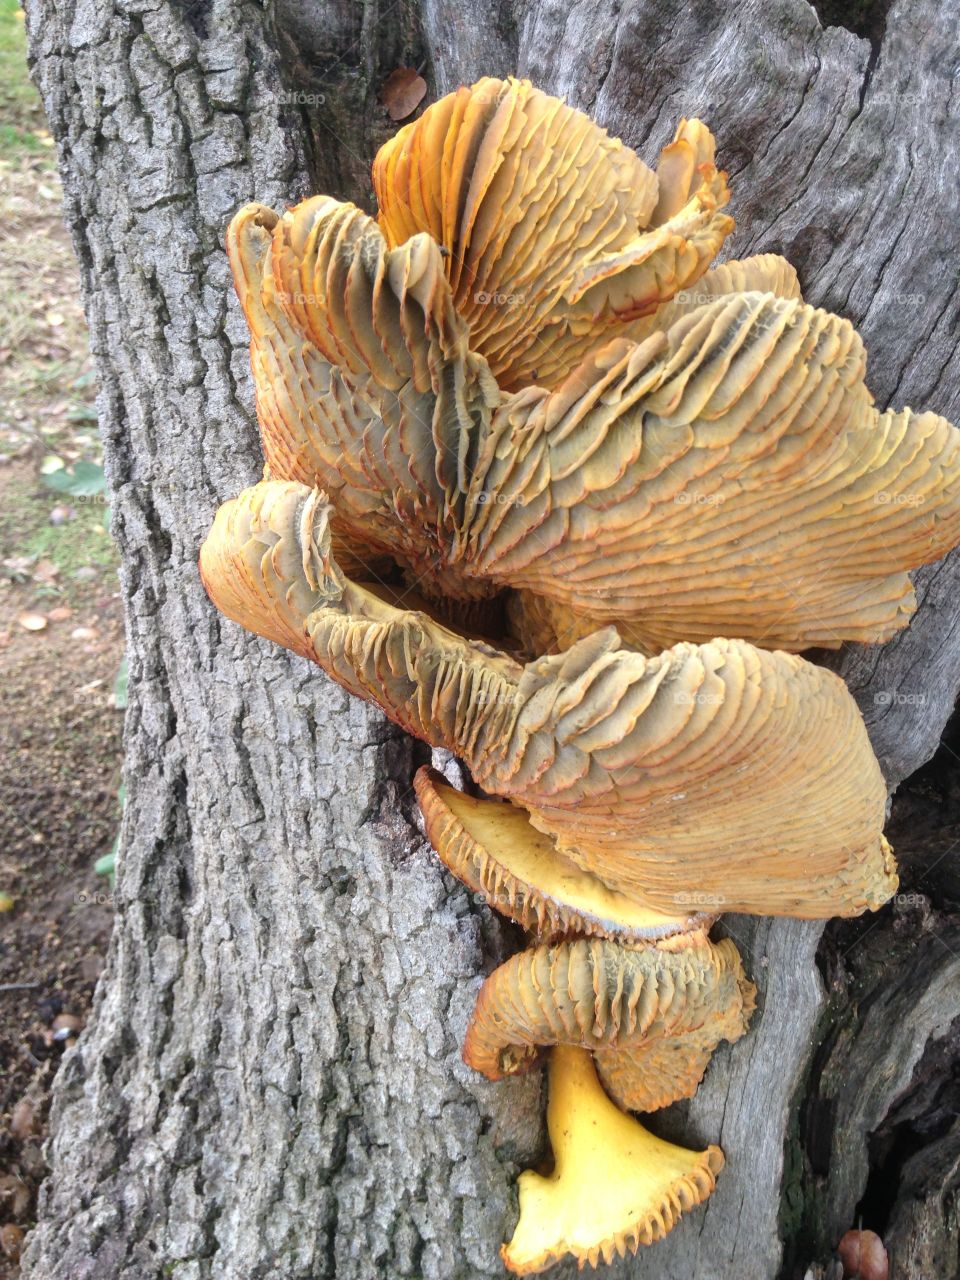 MushroomsII. Growing on tree at golf course 